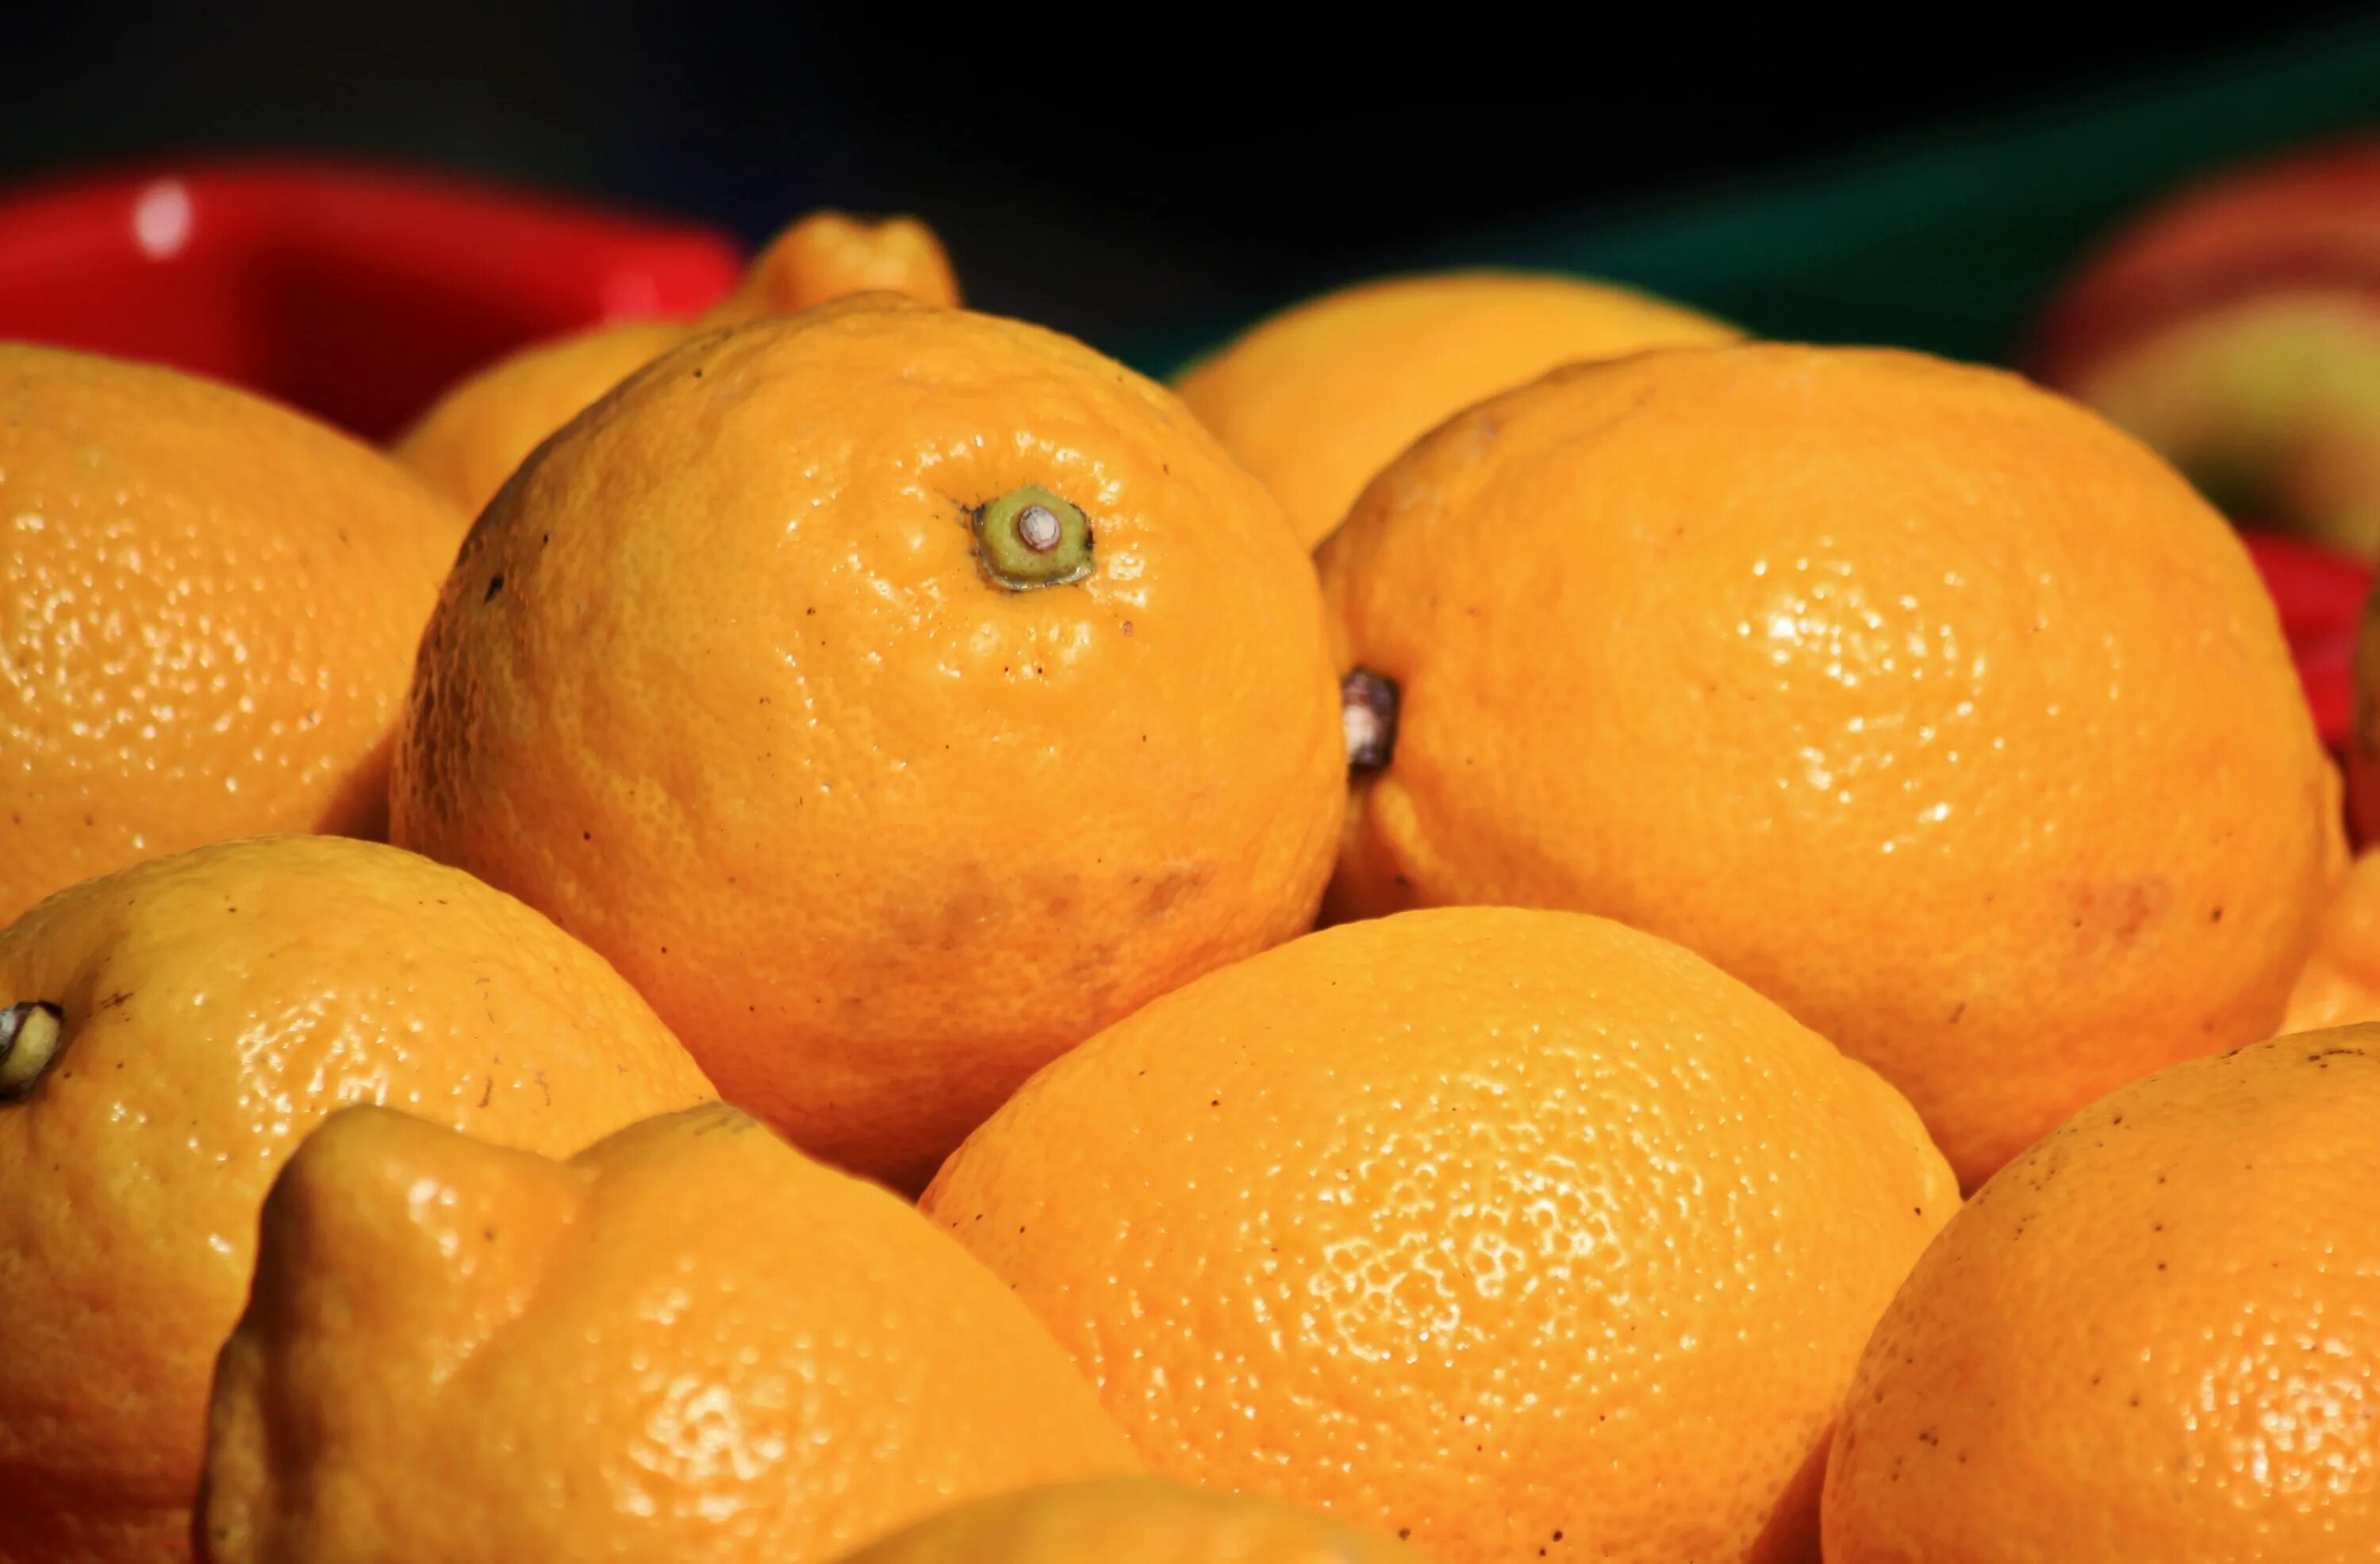 They like oranges. Цитрусовые фрукты. Лимон. Желтый фрукт. Рыжий фрукт.